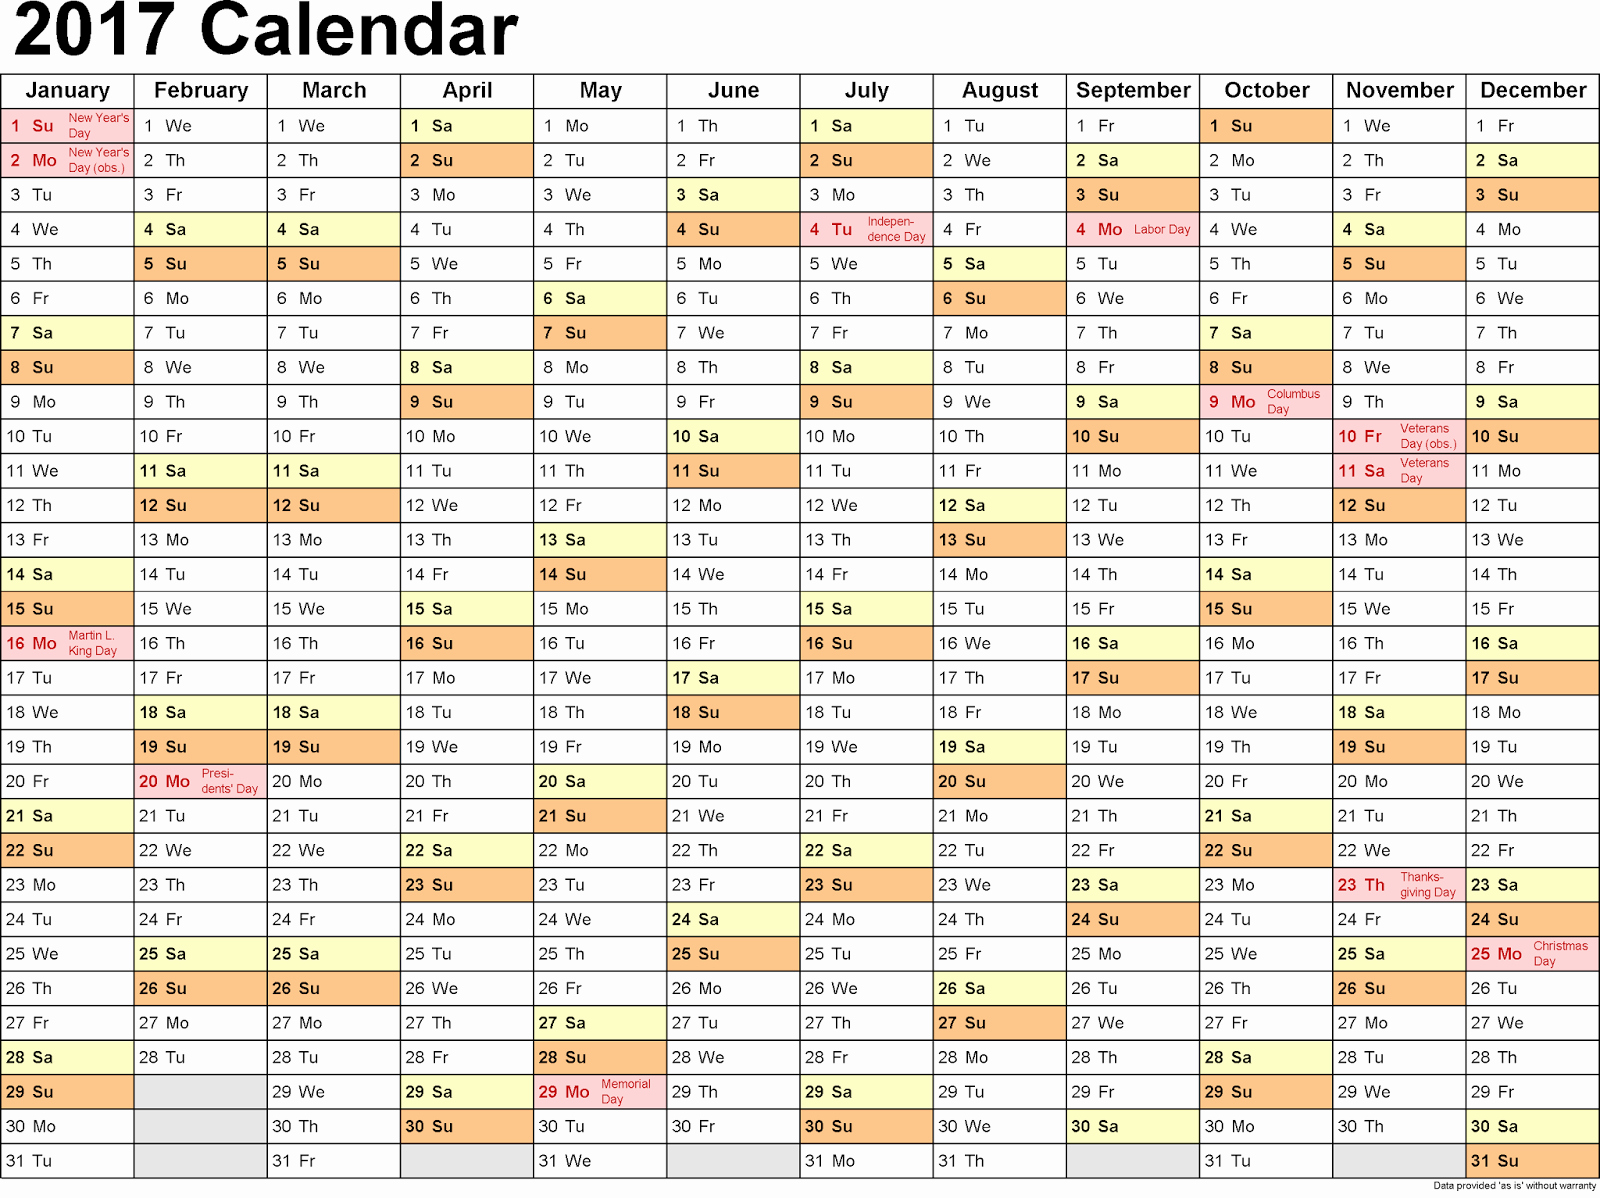 Free Printable Weekly Calendars 2017 Unique 2017 Weekly Calendar Templates